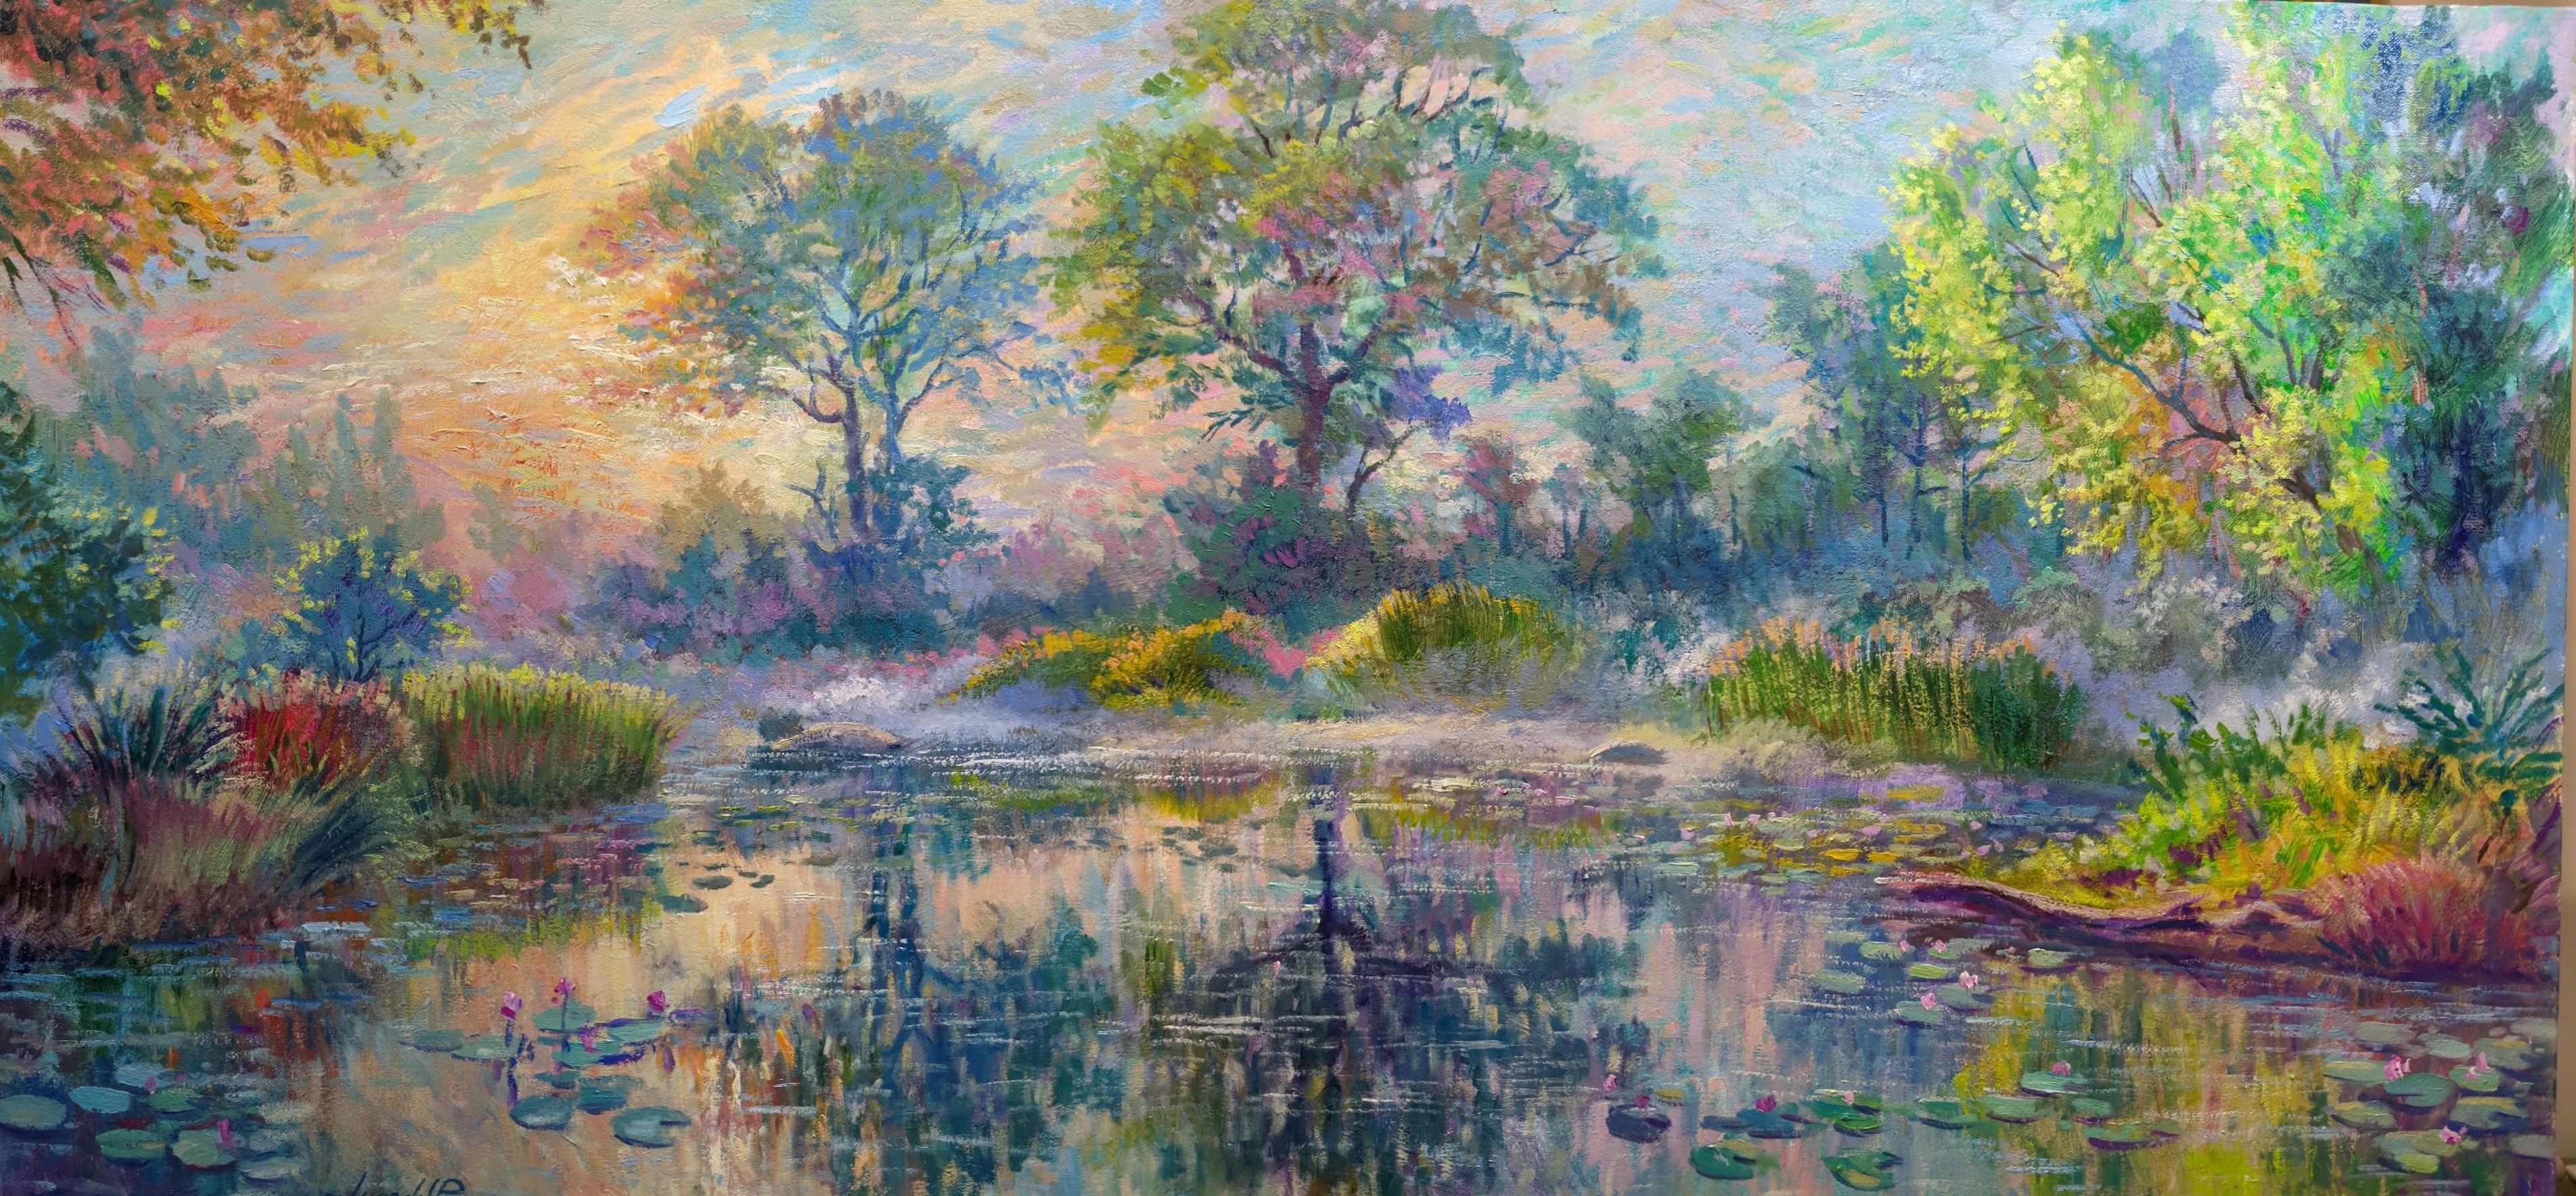 Juan del Pozo Landscape Painting - Waterlilies Pond - original modern landscape art- impressionist oil painting